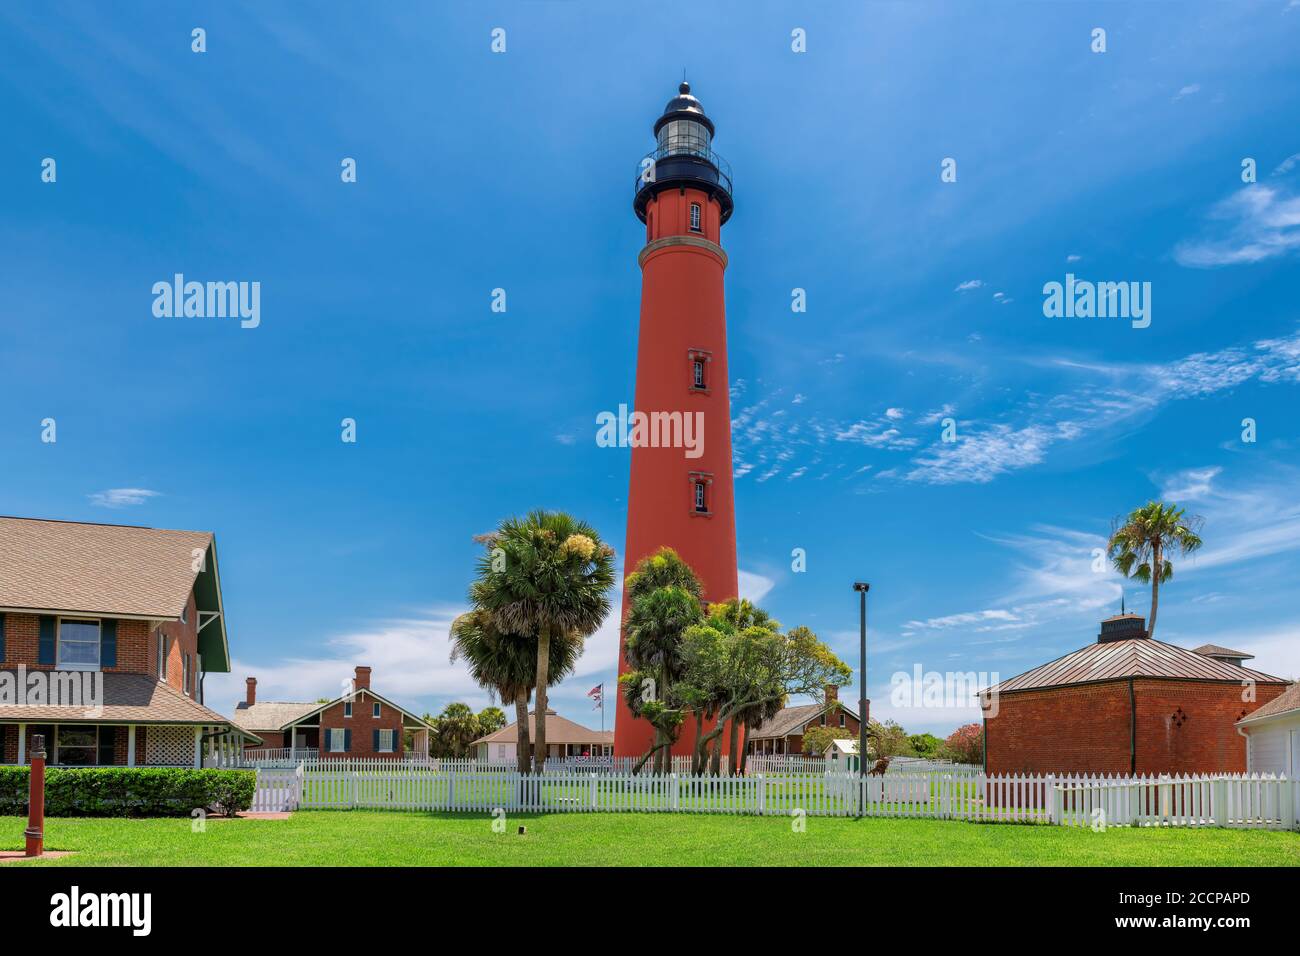 Ponce Leon Lighthouse, Daytona beach, Florida. Stock Photo